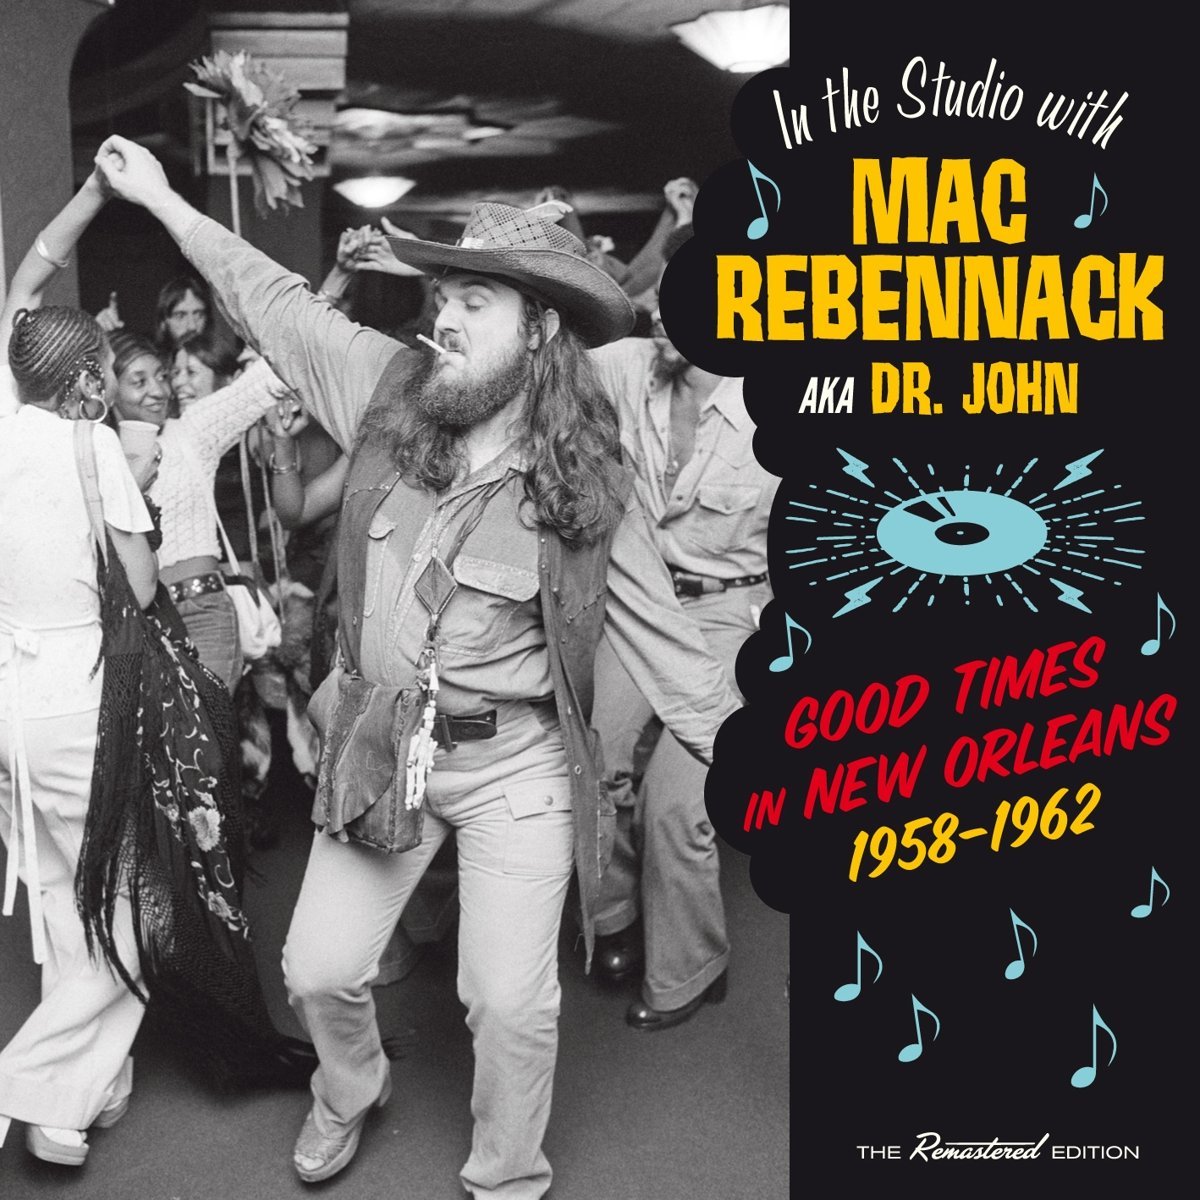 MAC REBENNACK (aka DR. JOHN) / IN THE STUDIO WITH MAC REBENNACK AKA DR. JOHN - GOOD TIMES IN NEW ORLEANS 1958-1962 (180G LP)